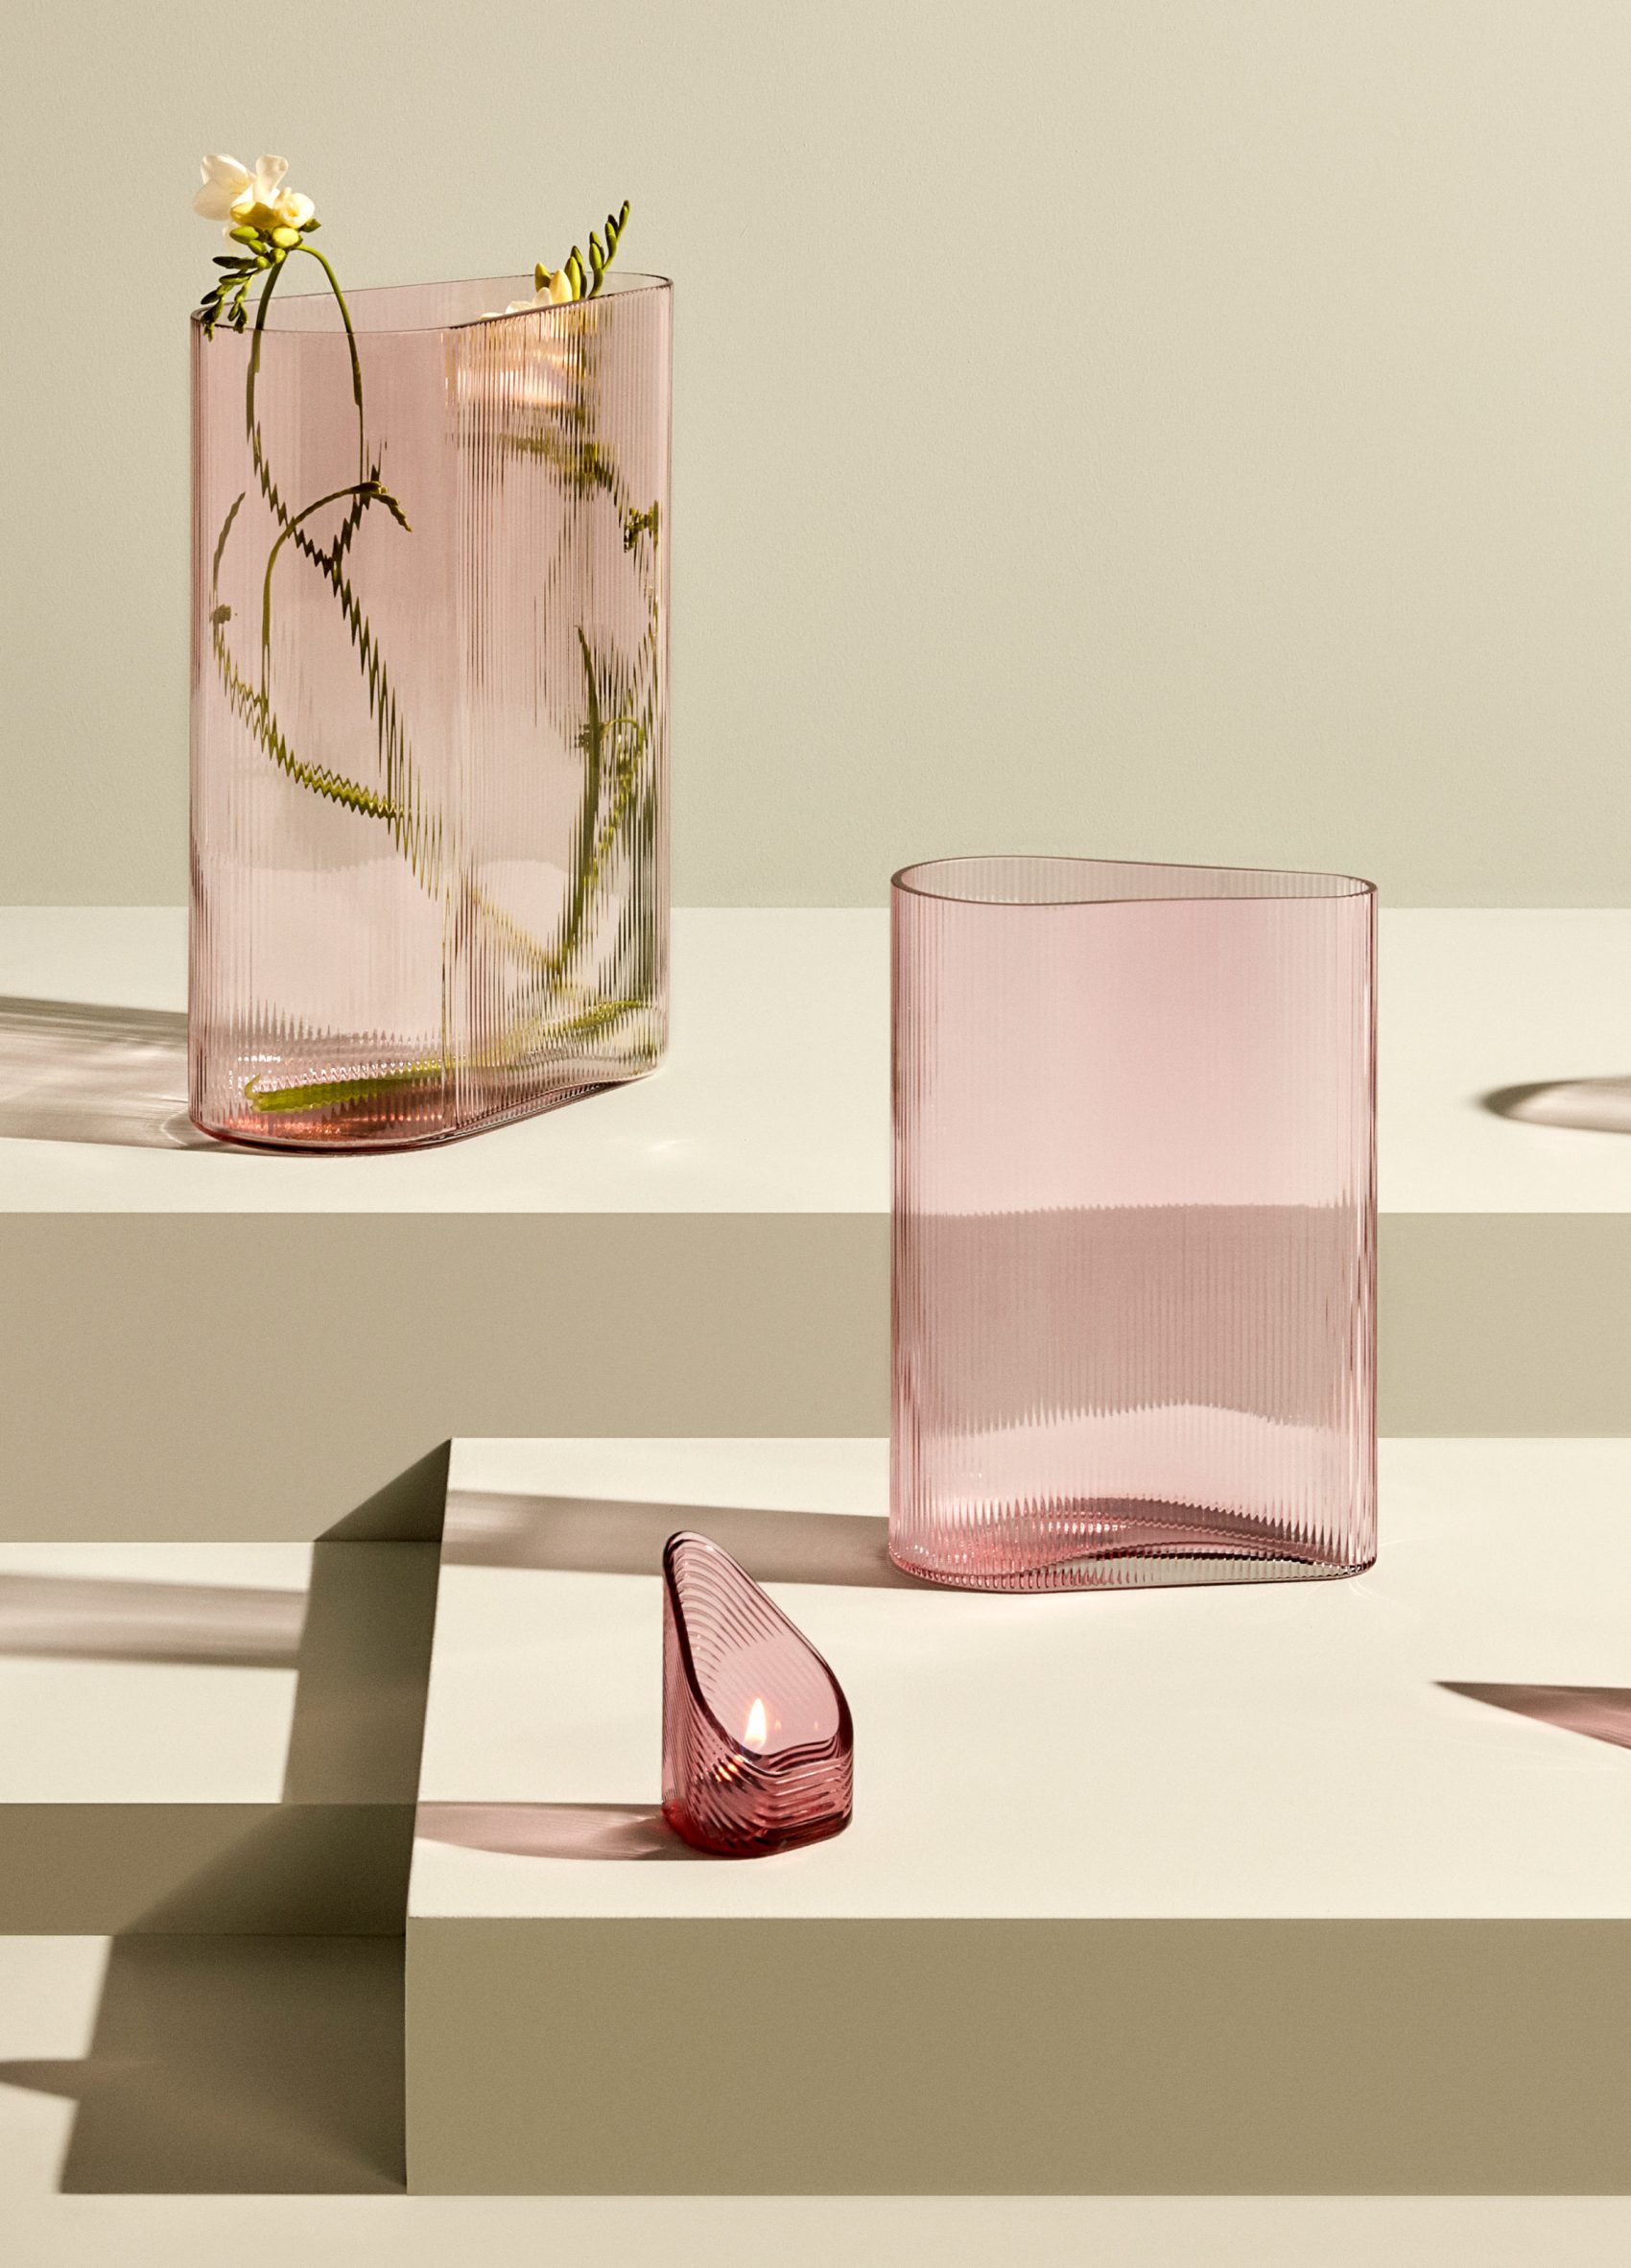 Rose-coloured glassware